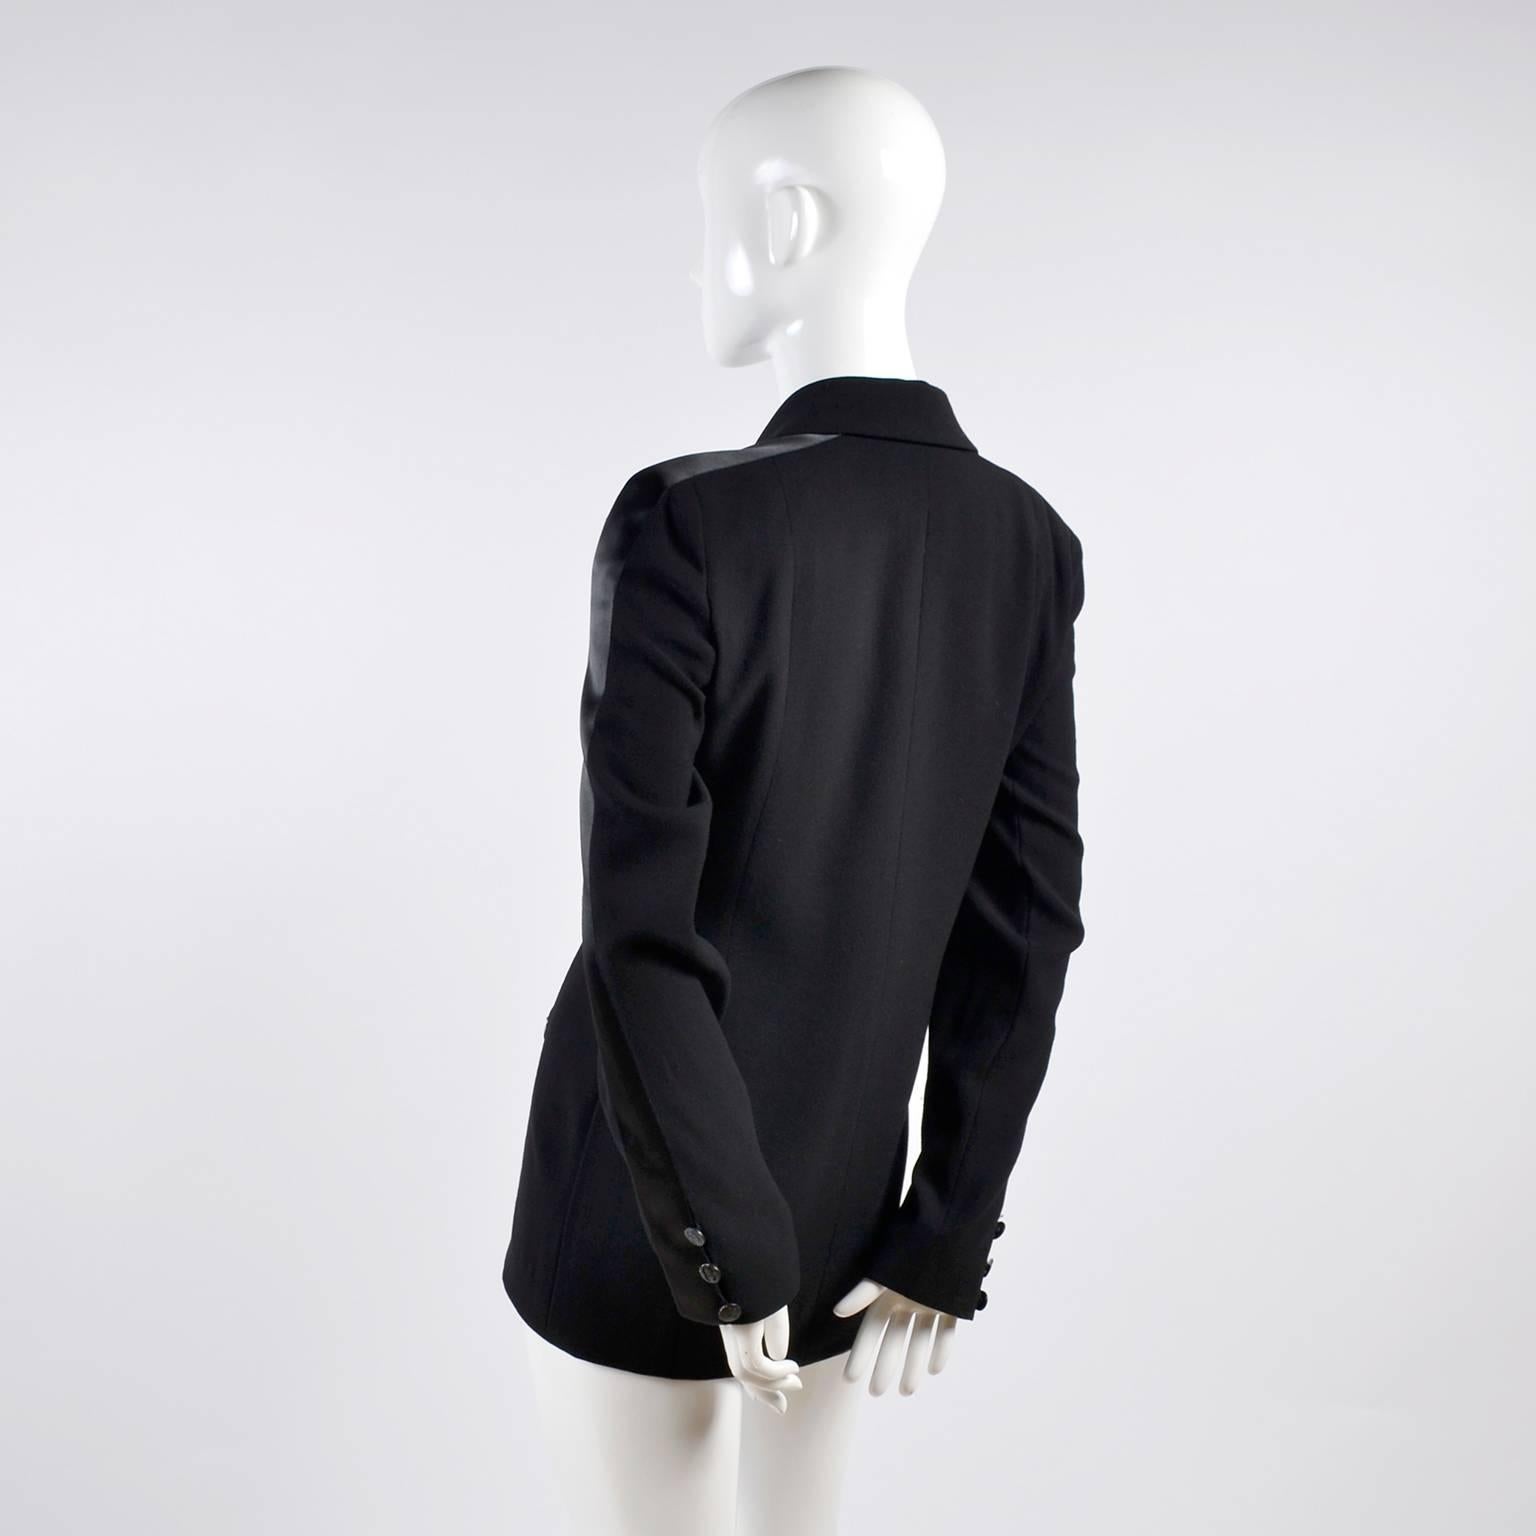 2003 Chanel Jacket Black Wool Blazer W Satin Stripes in Size 38 1